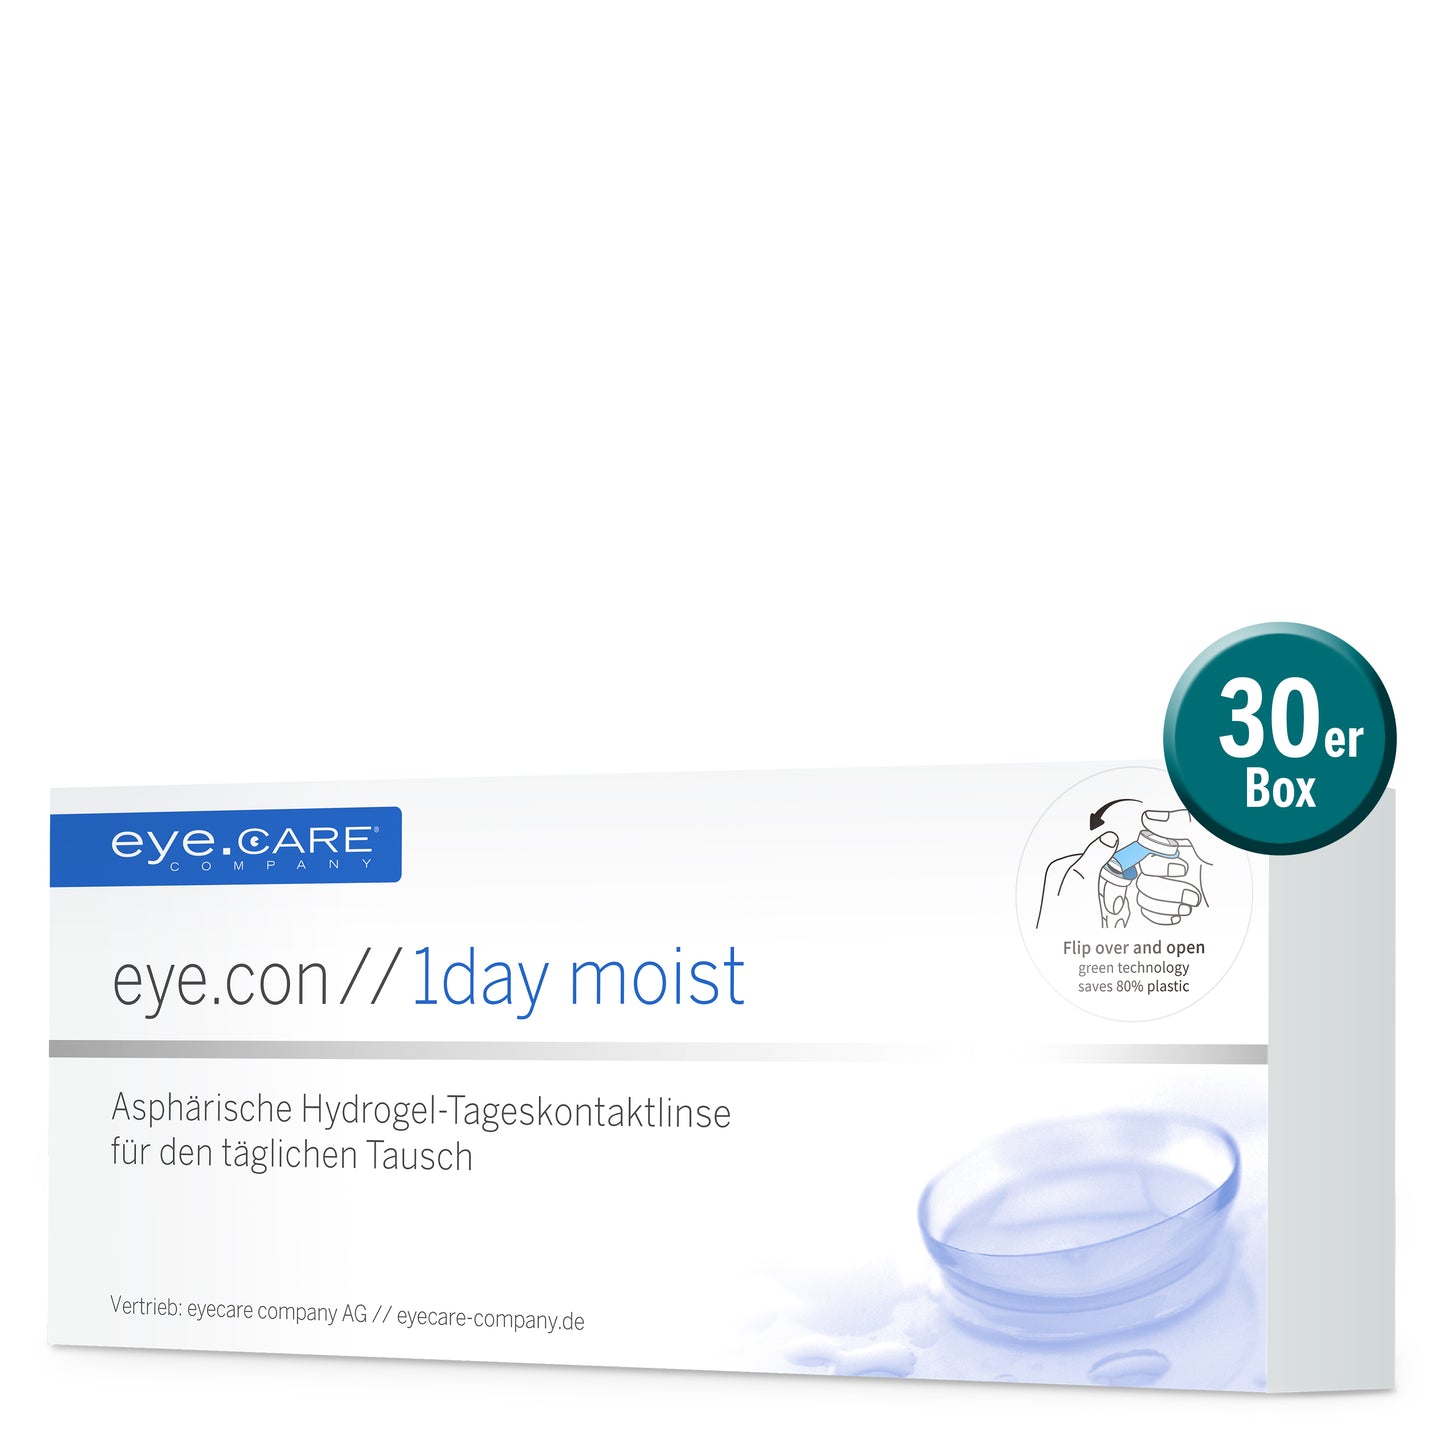 eye.con // 1day moist 30er Box